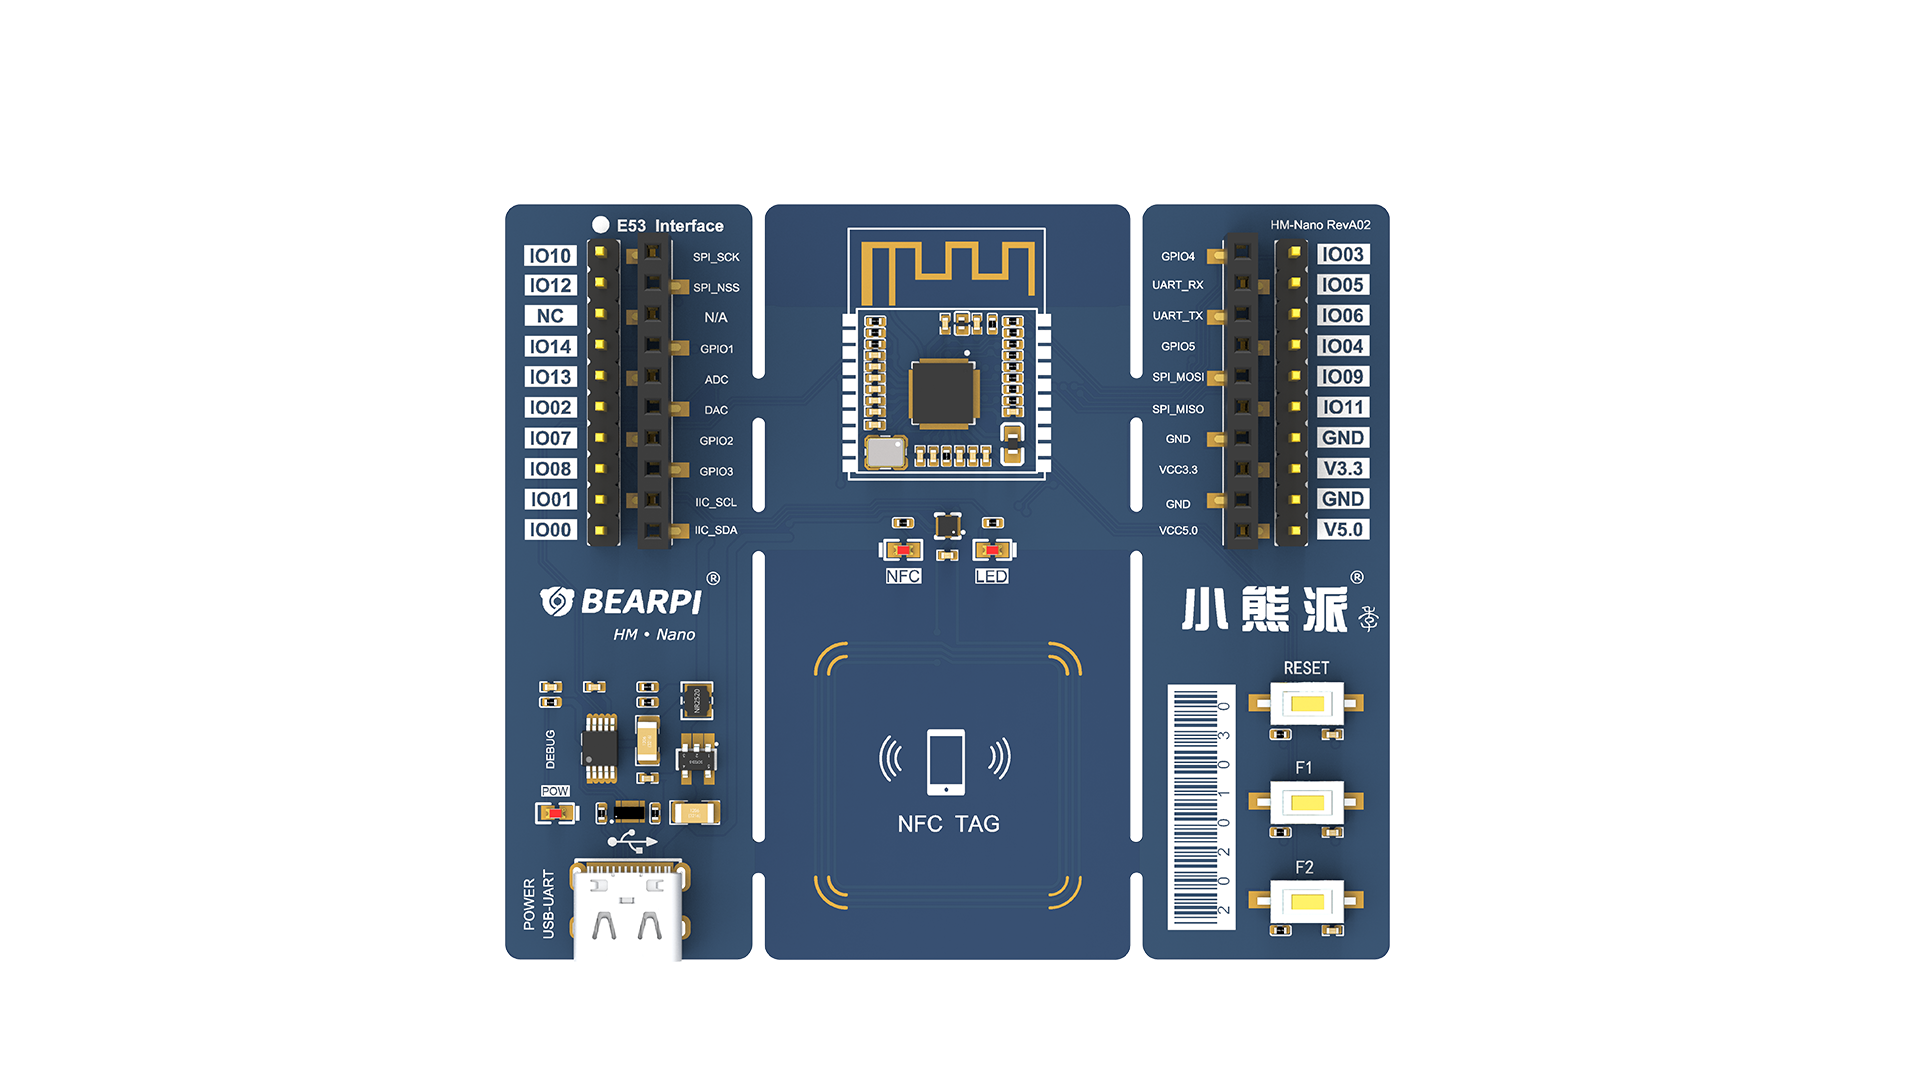 BearPi-HM_Nano开发板传感器驱动开发——E53_SC1读取光照强度-鸿蒙开发者社区